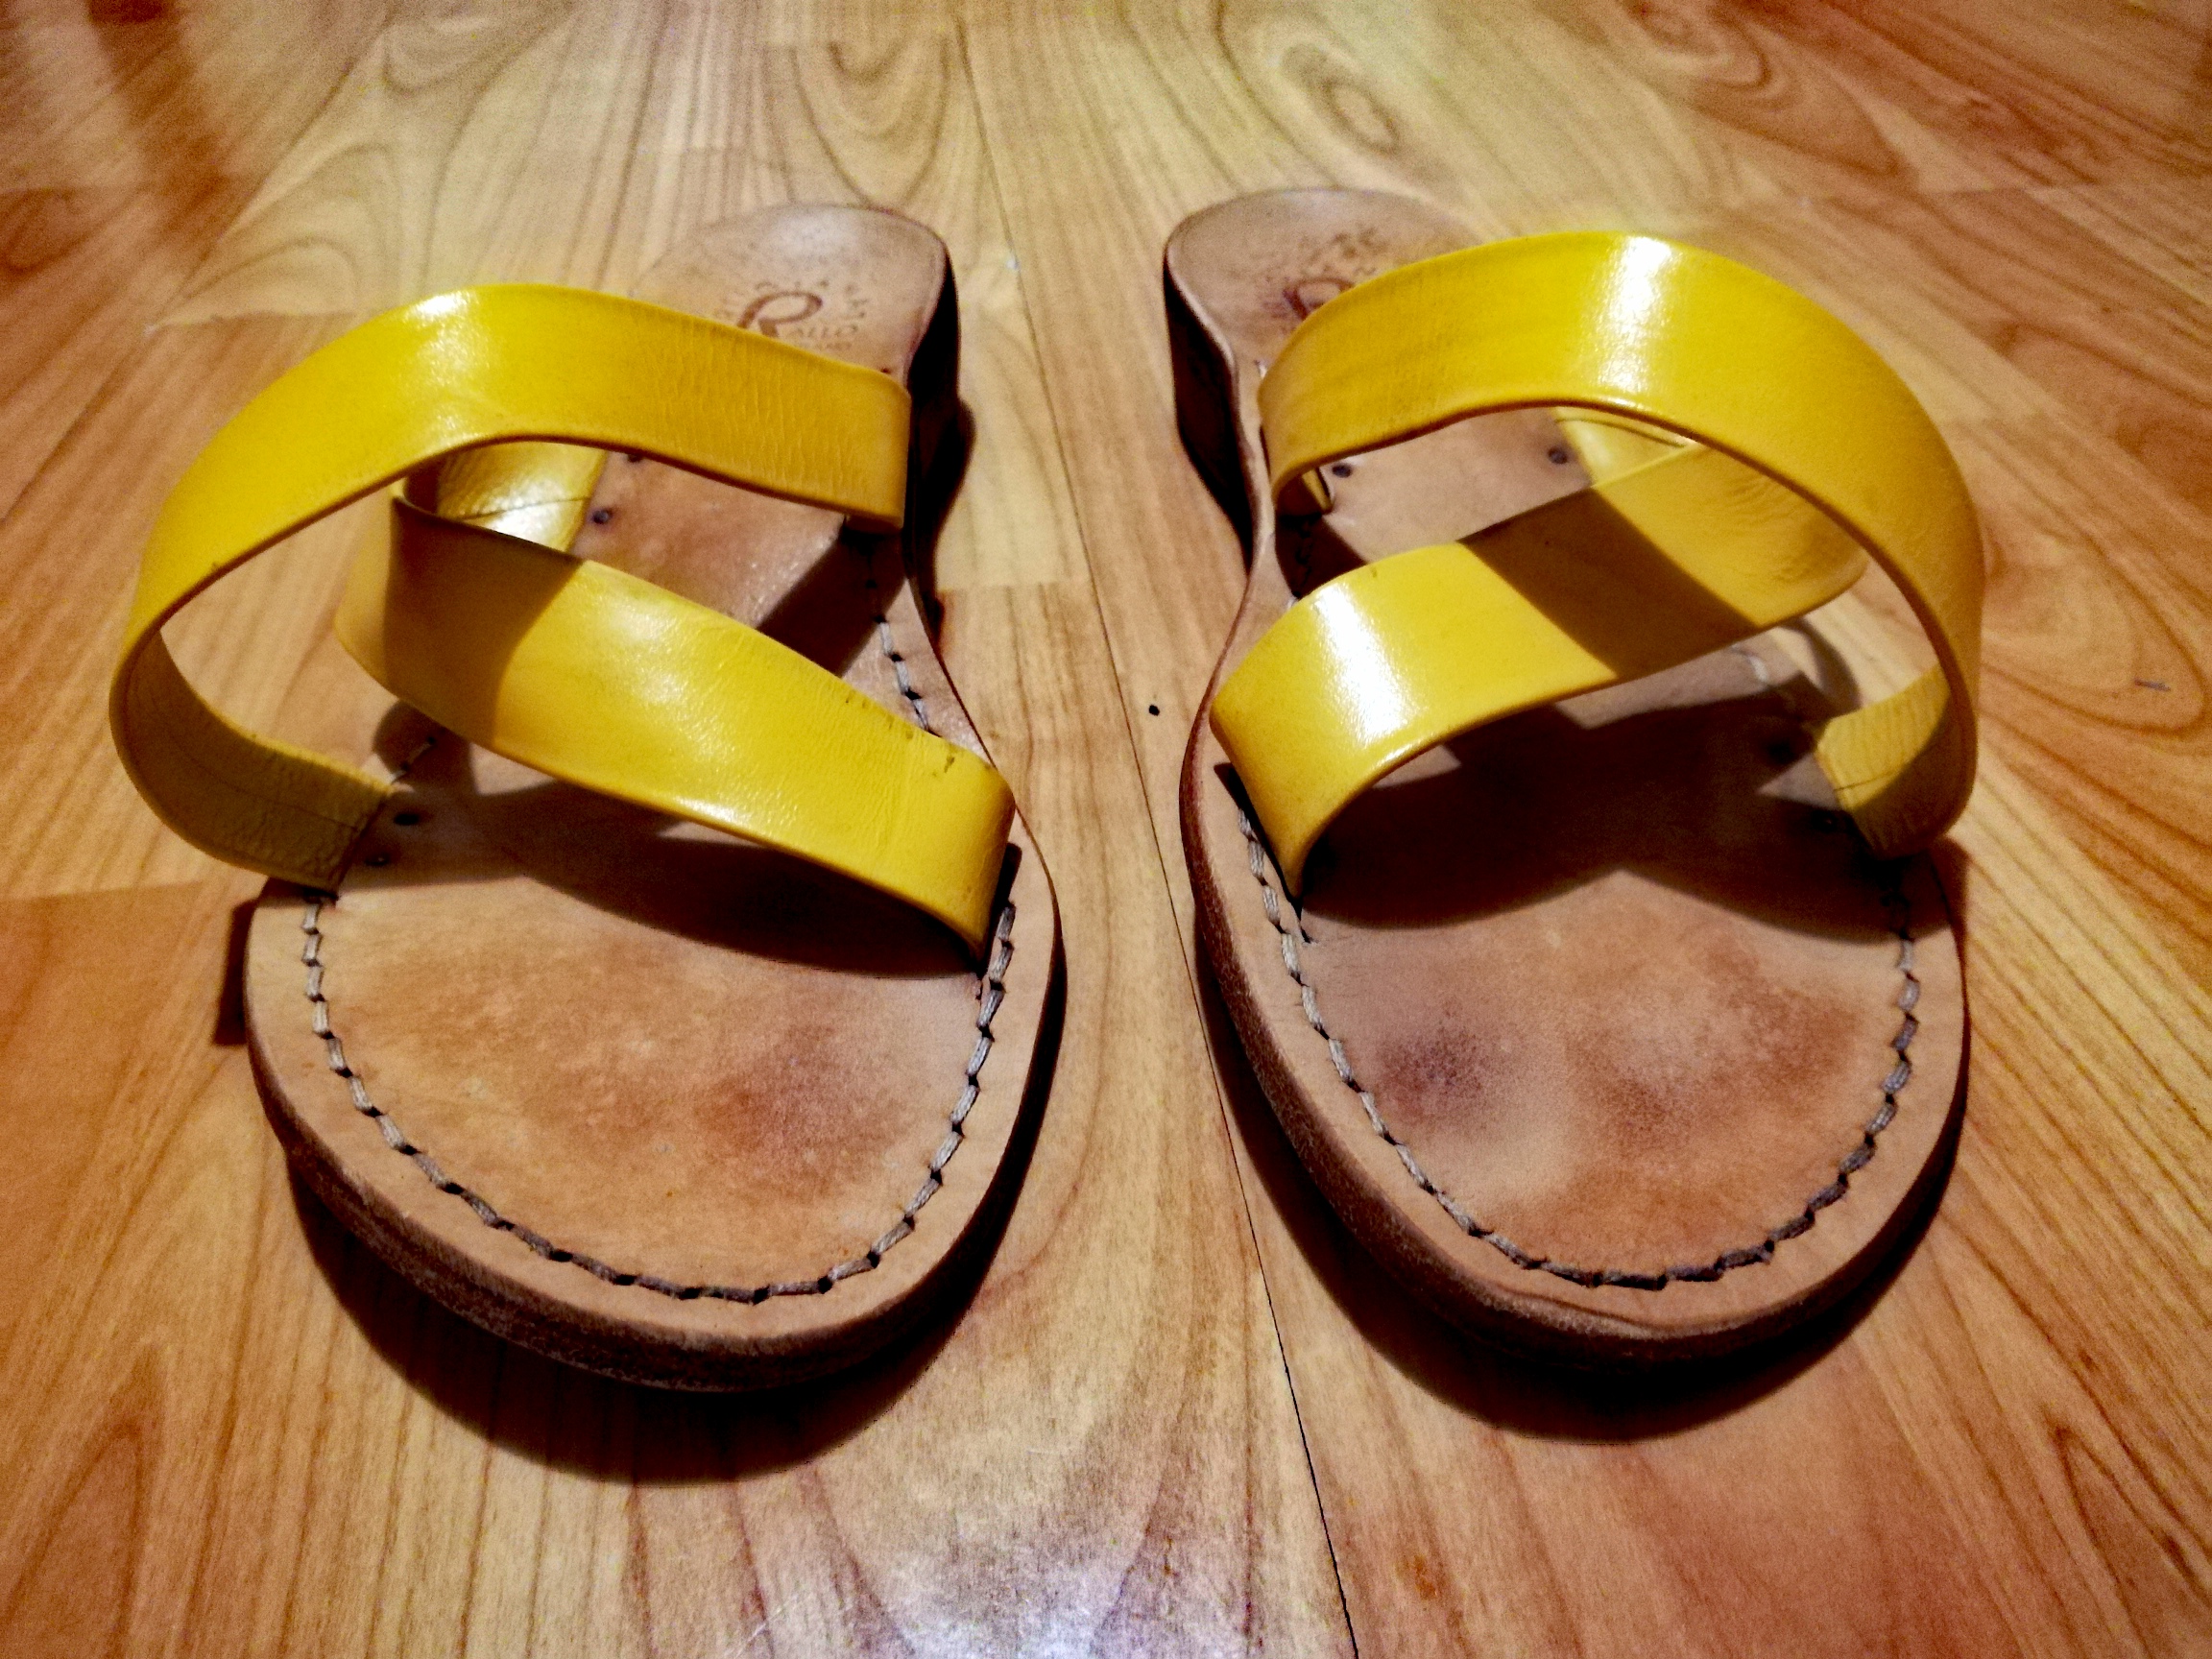 Positano handmade sandals- are they worth it? - Magnets On The Fridge